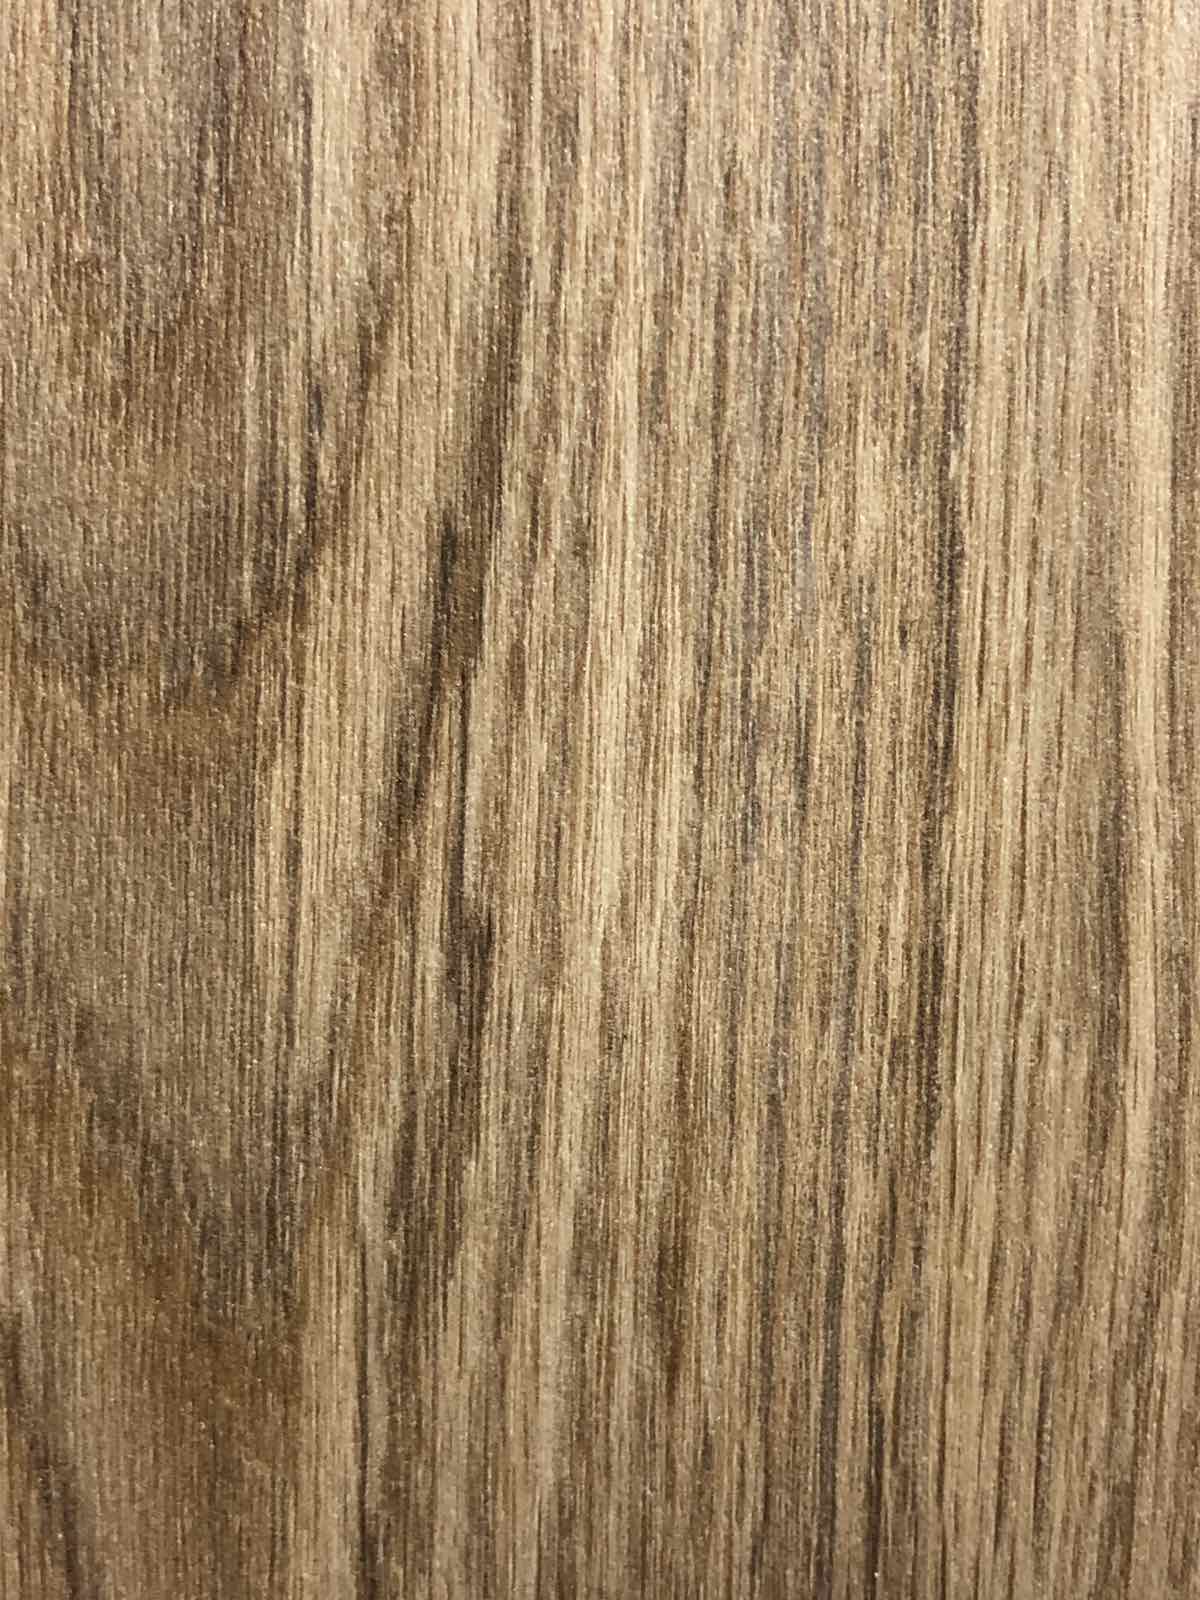 Traditional Rustic Oak